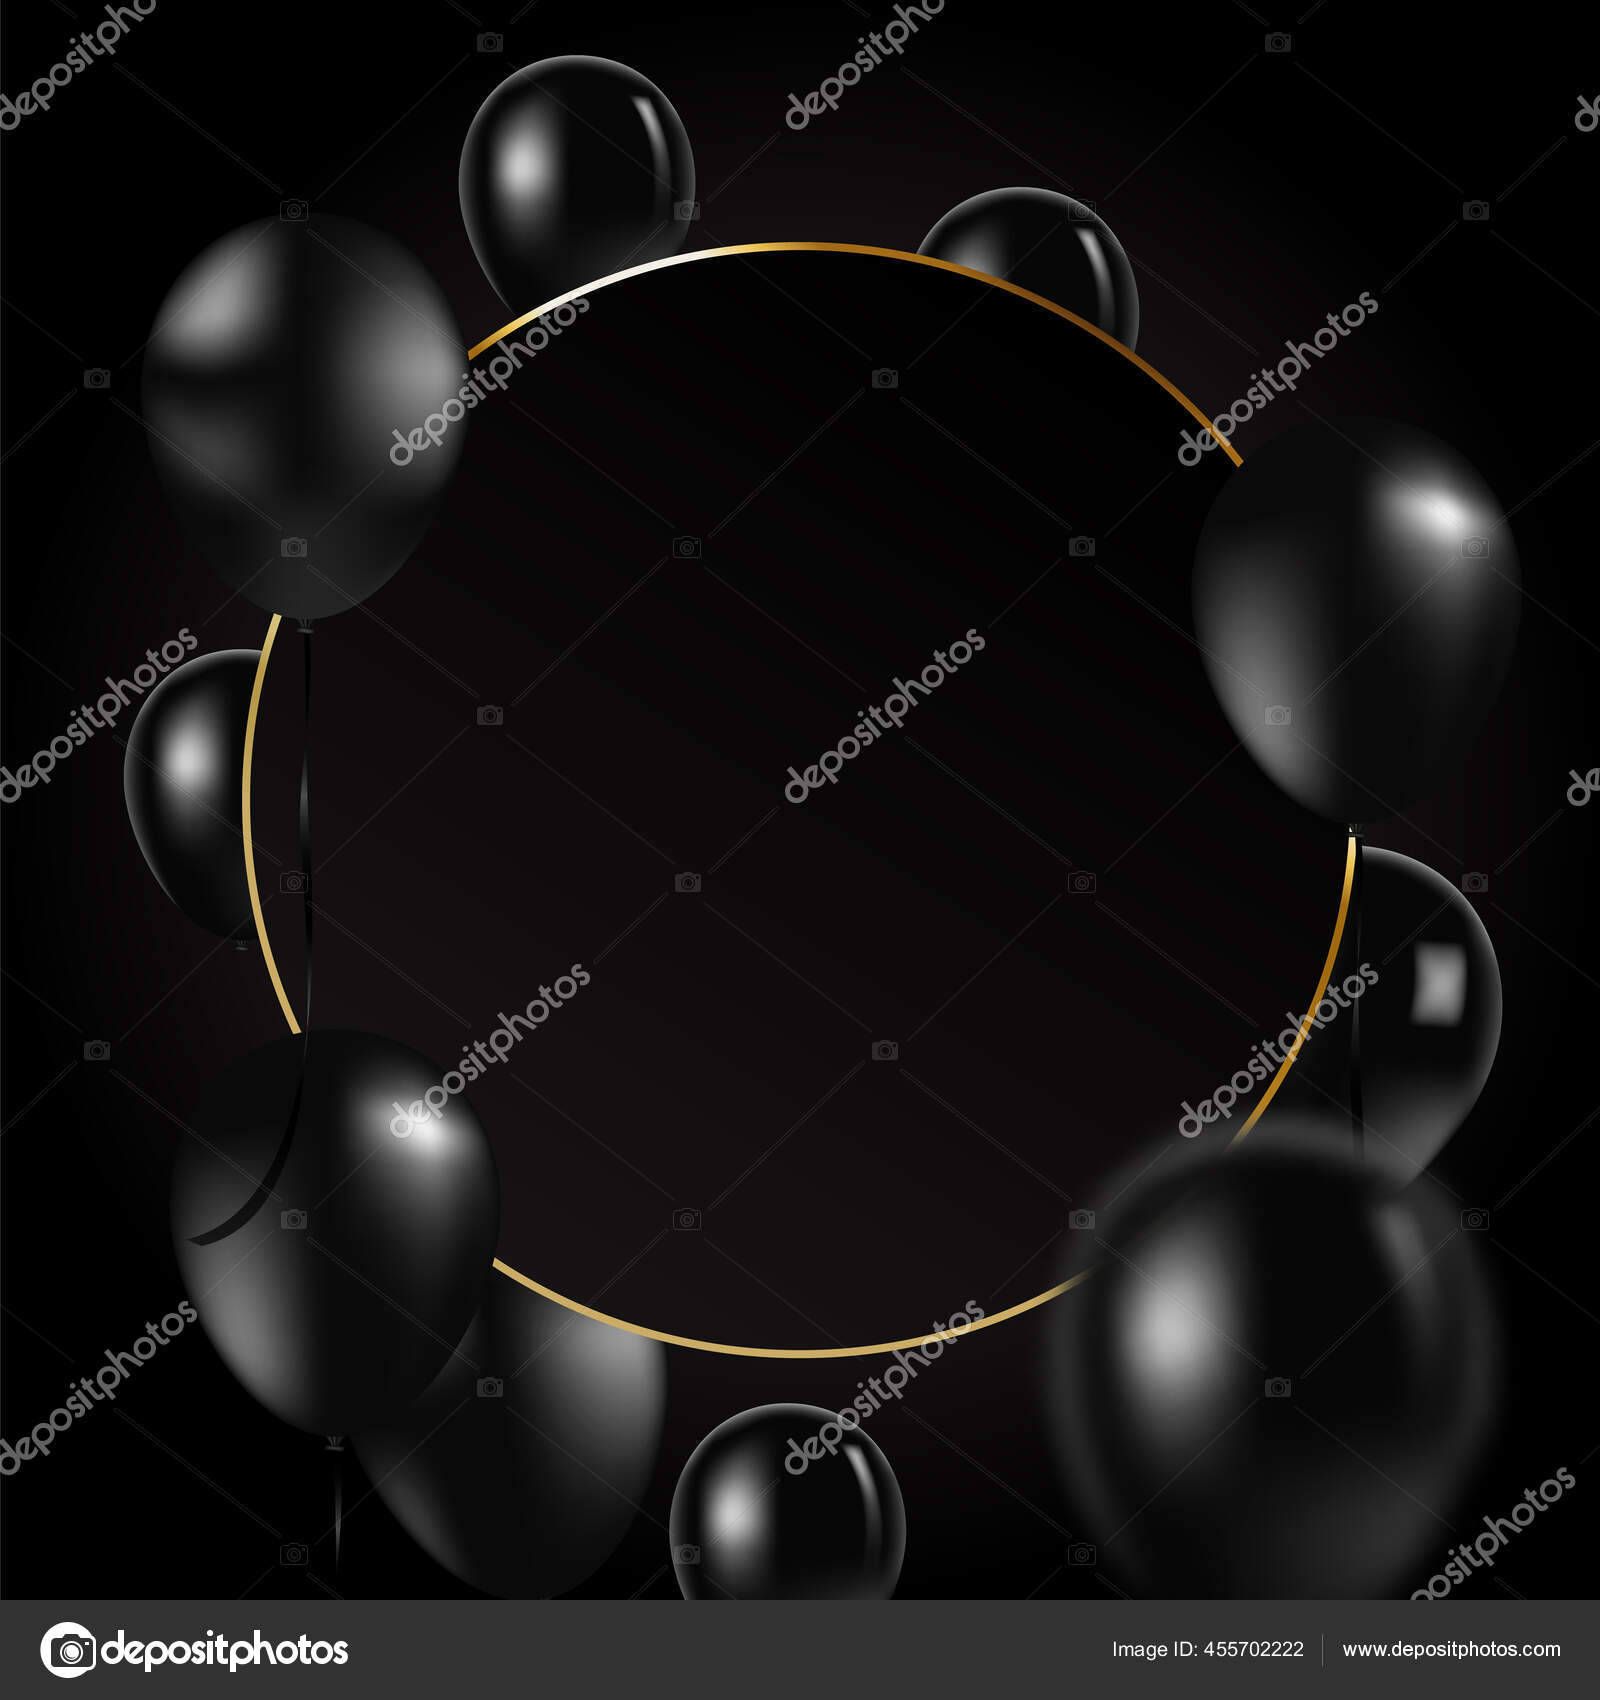 Balloons black background Vector Art Stock Images | Depositphotos